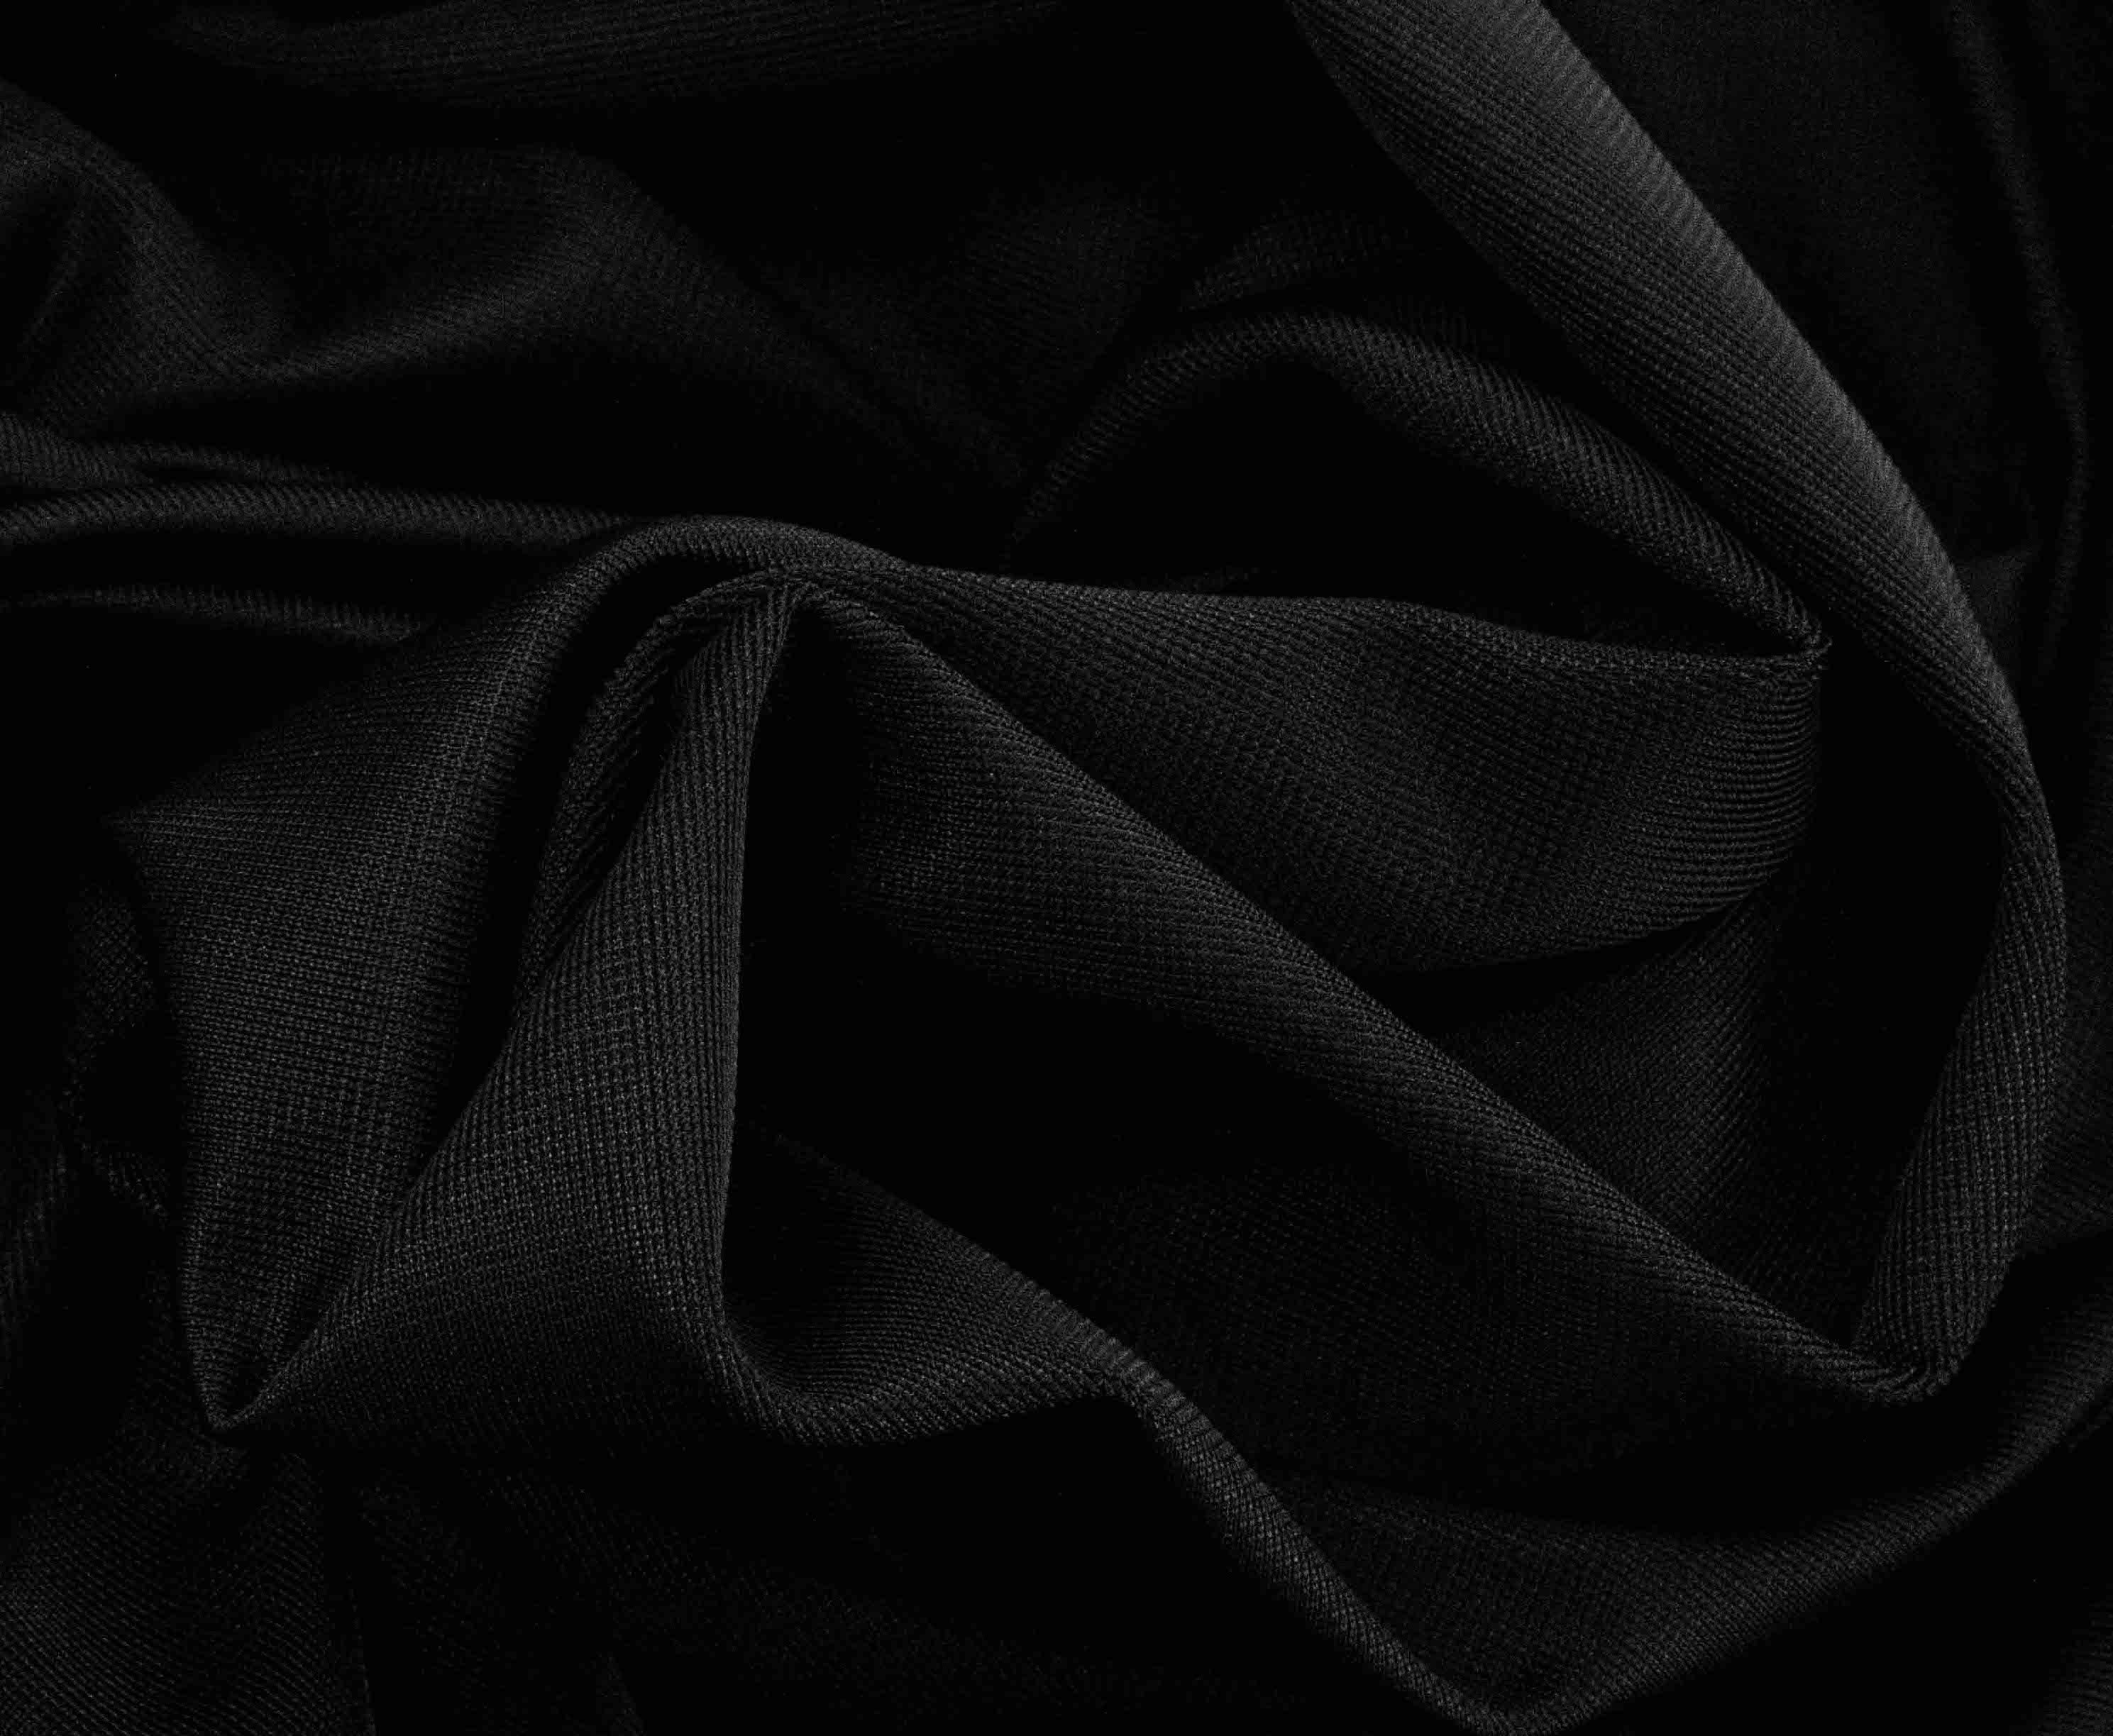 Rubies Bras Stretch Satin fabric in black. Close up.